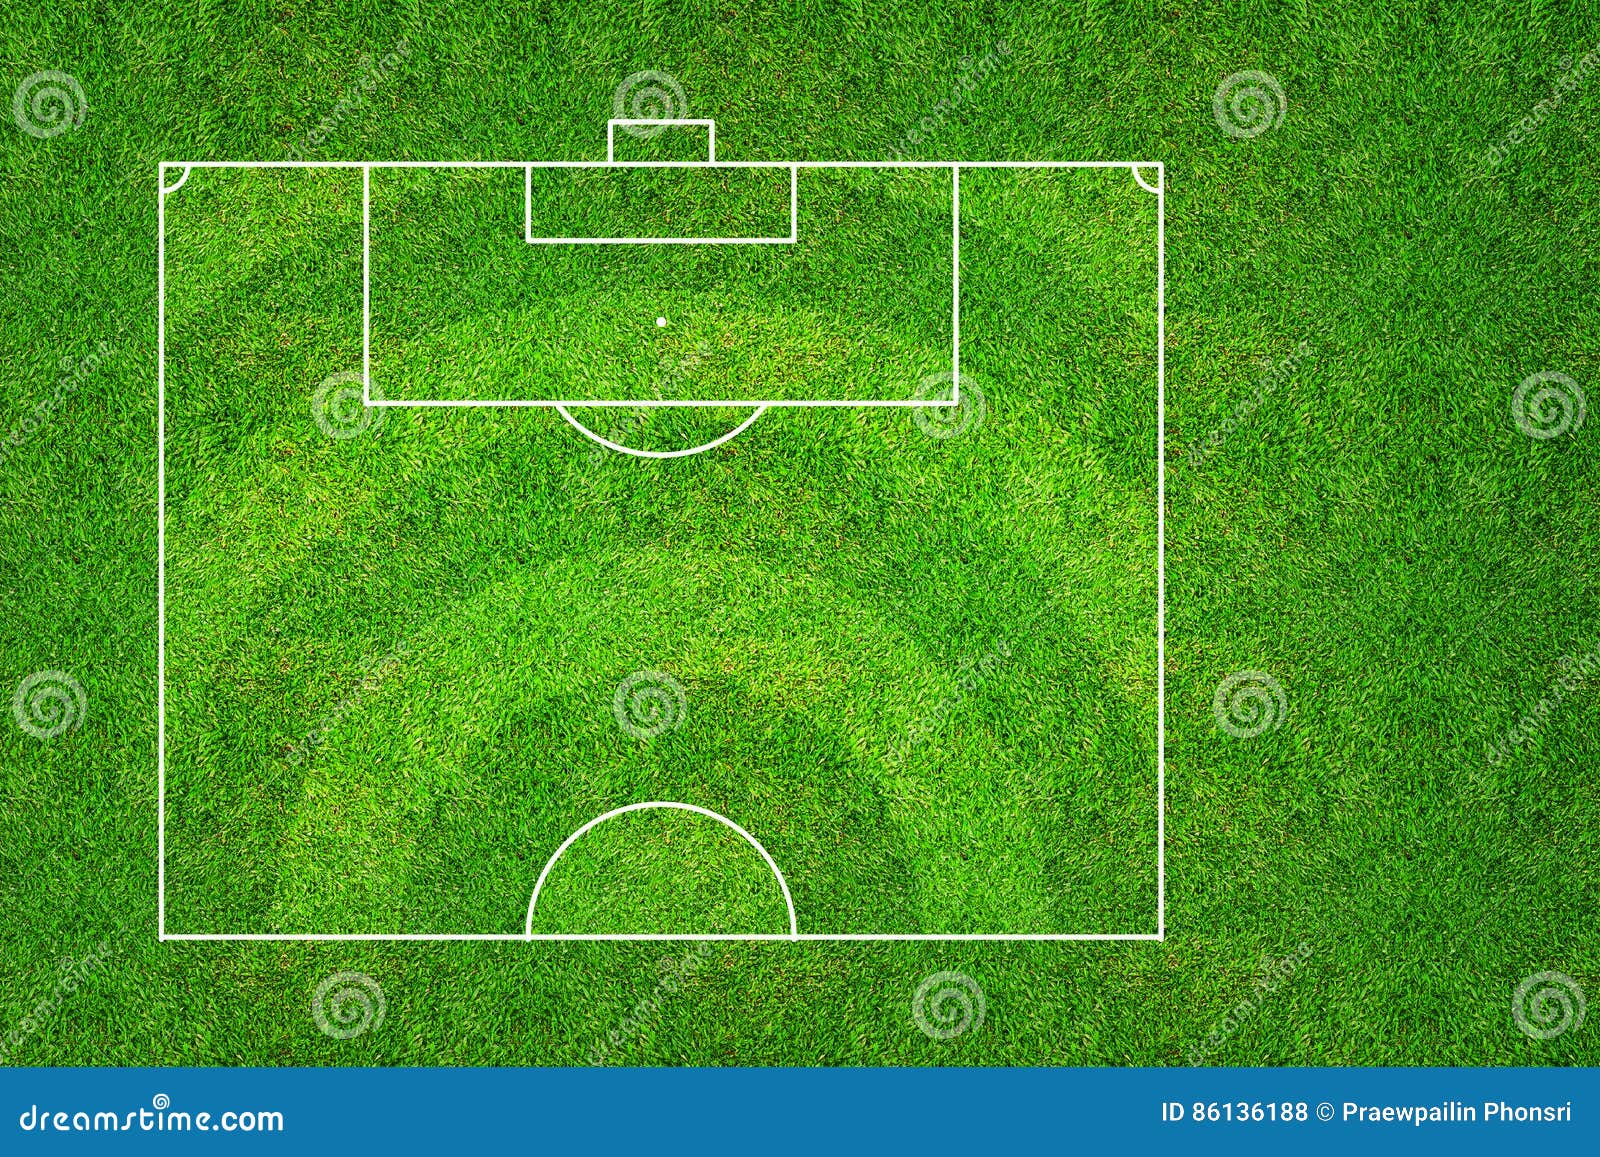 half-soccer-field-template